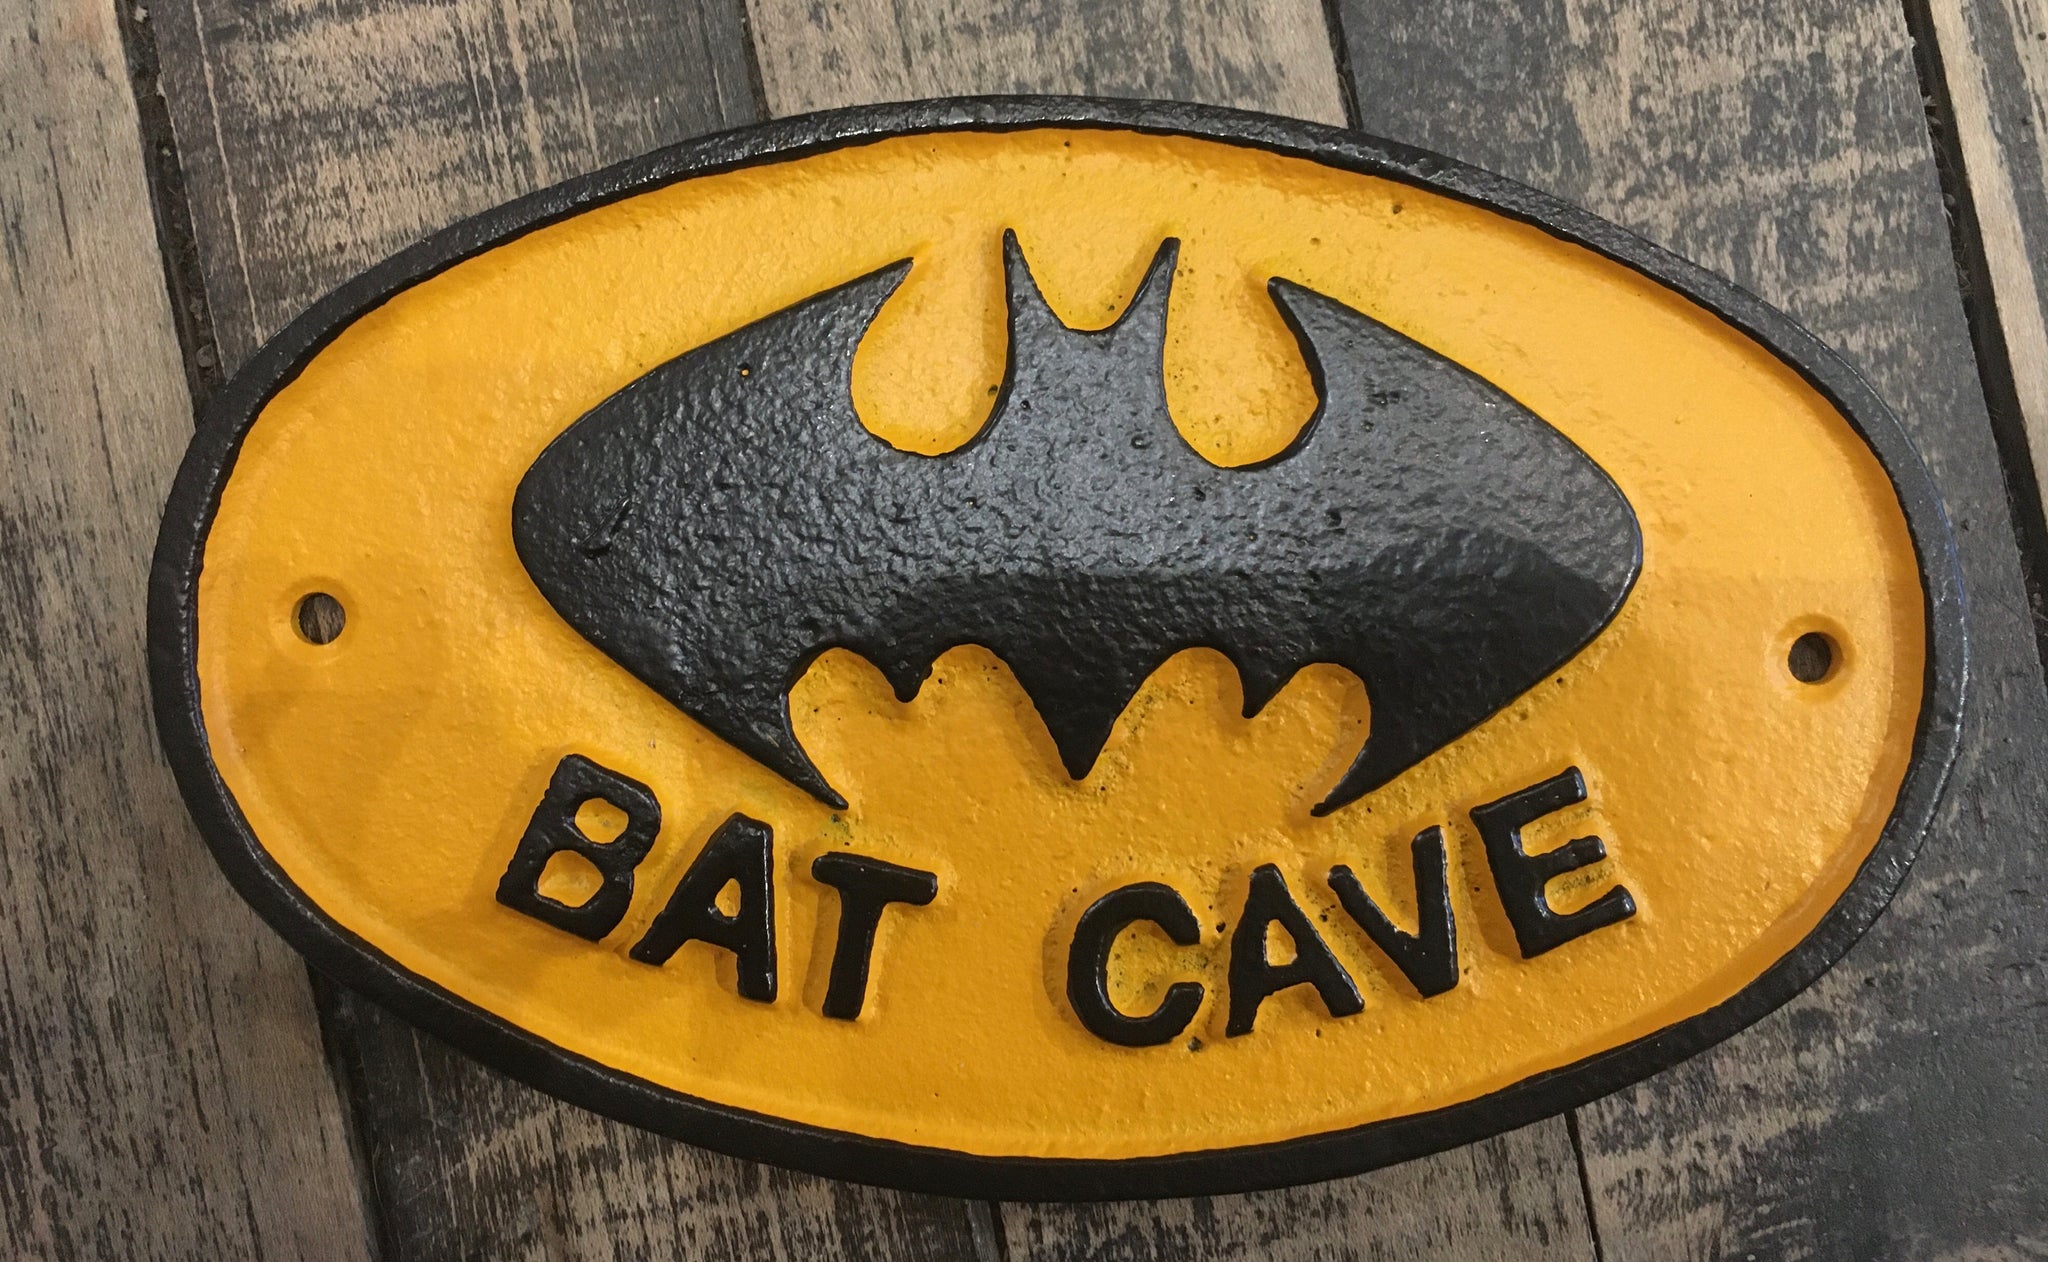 BAT CAVE Cast Iron Sign